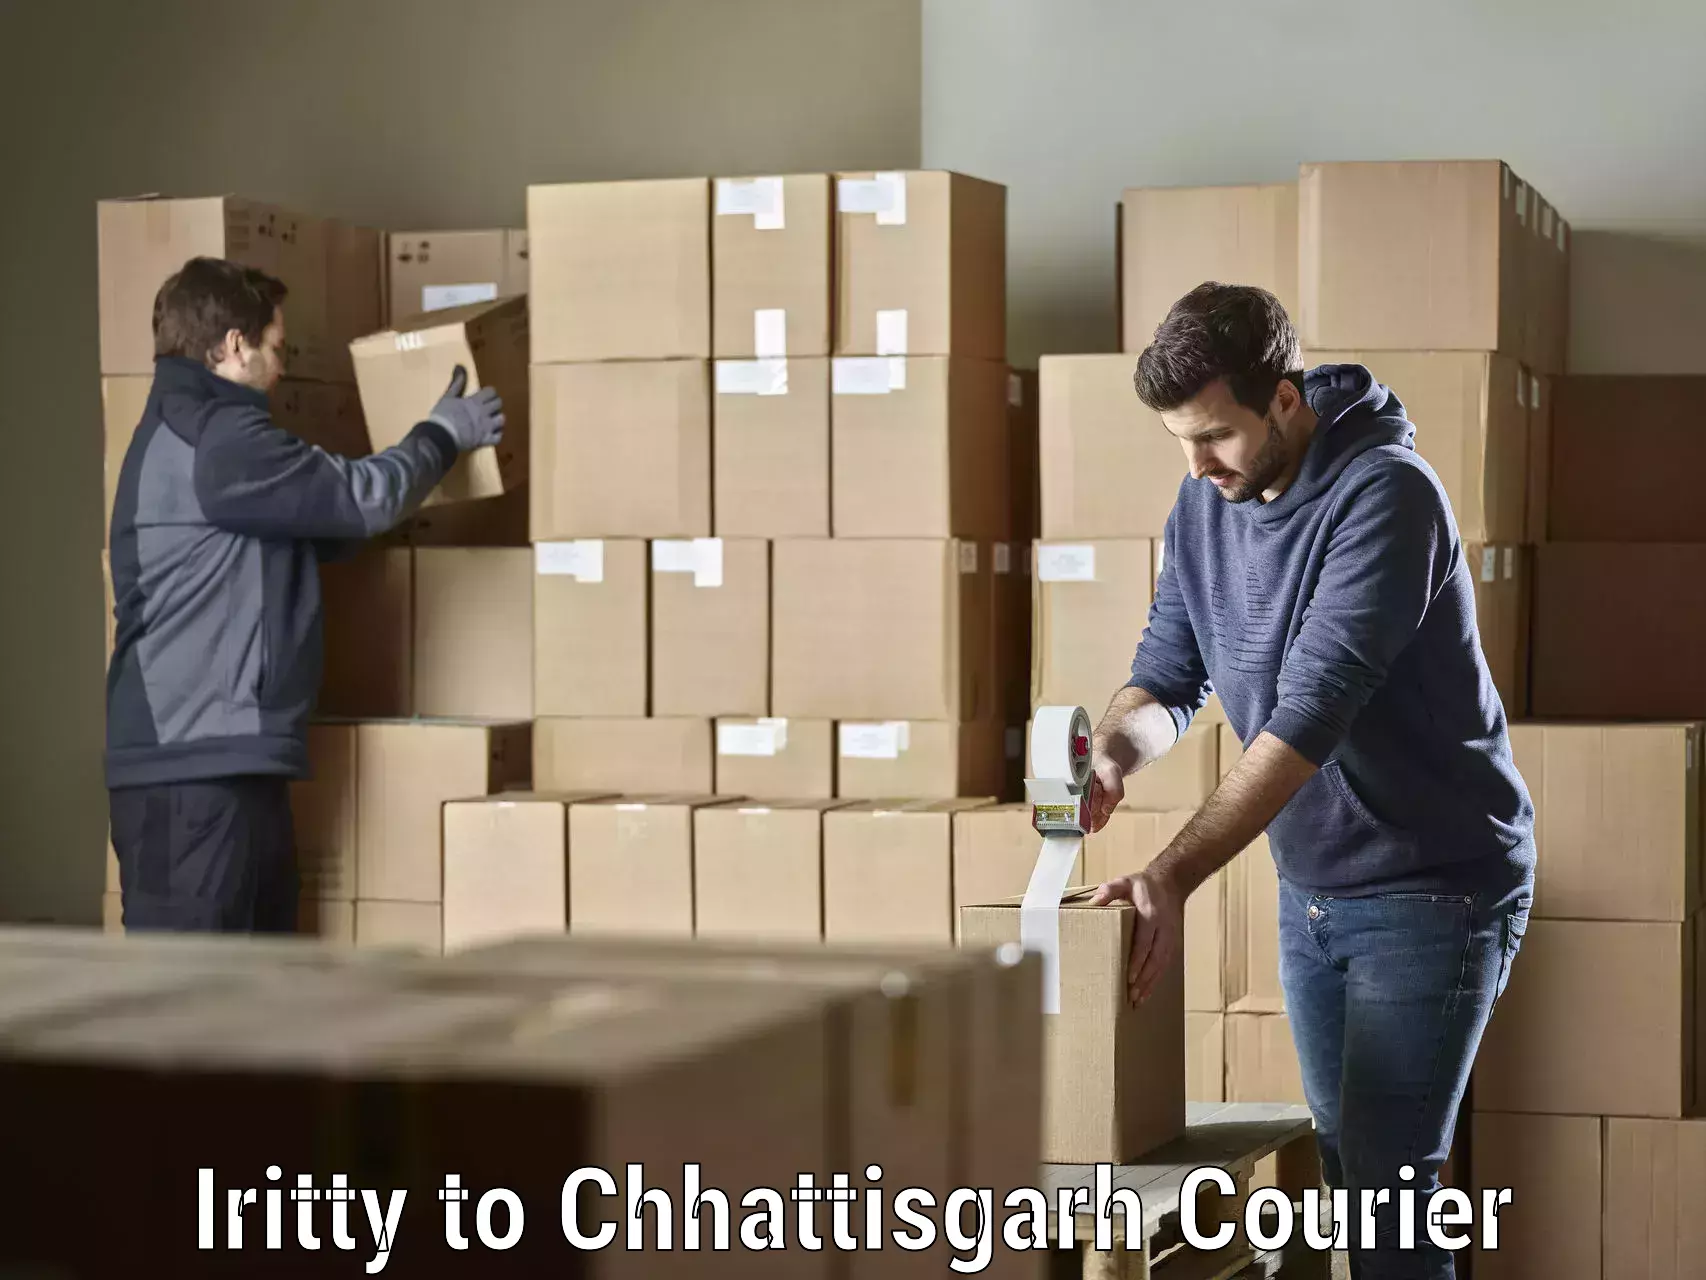 Courier service innovation Iritty to Chhattisgarh